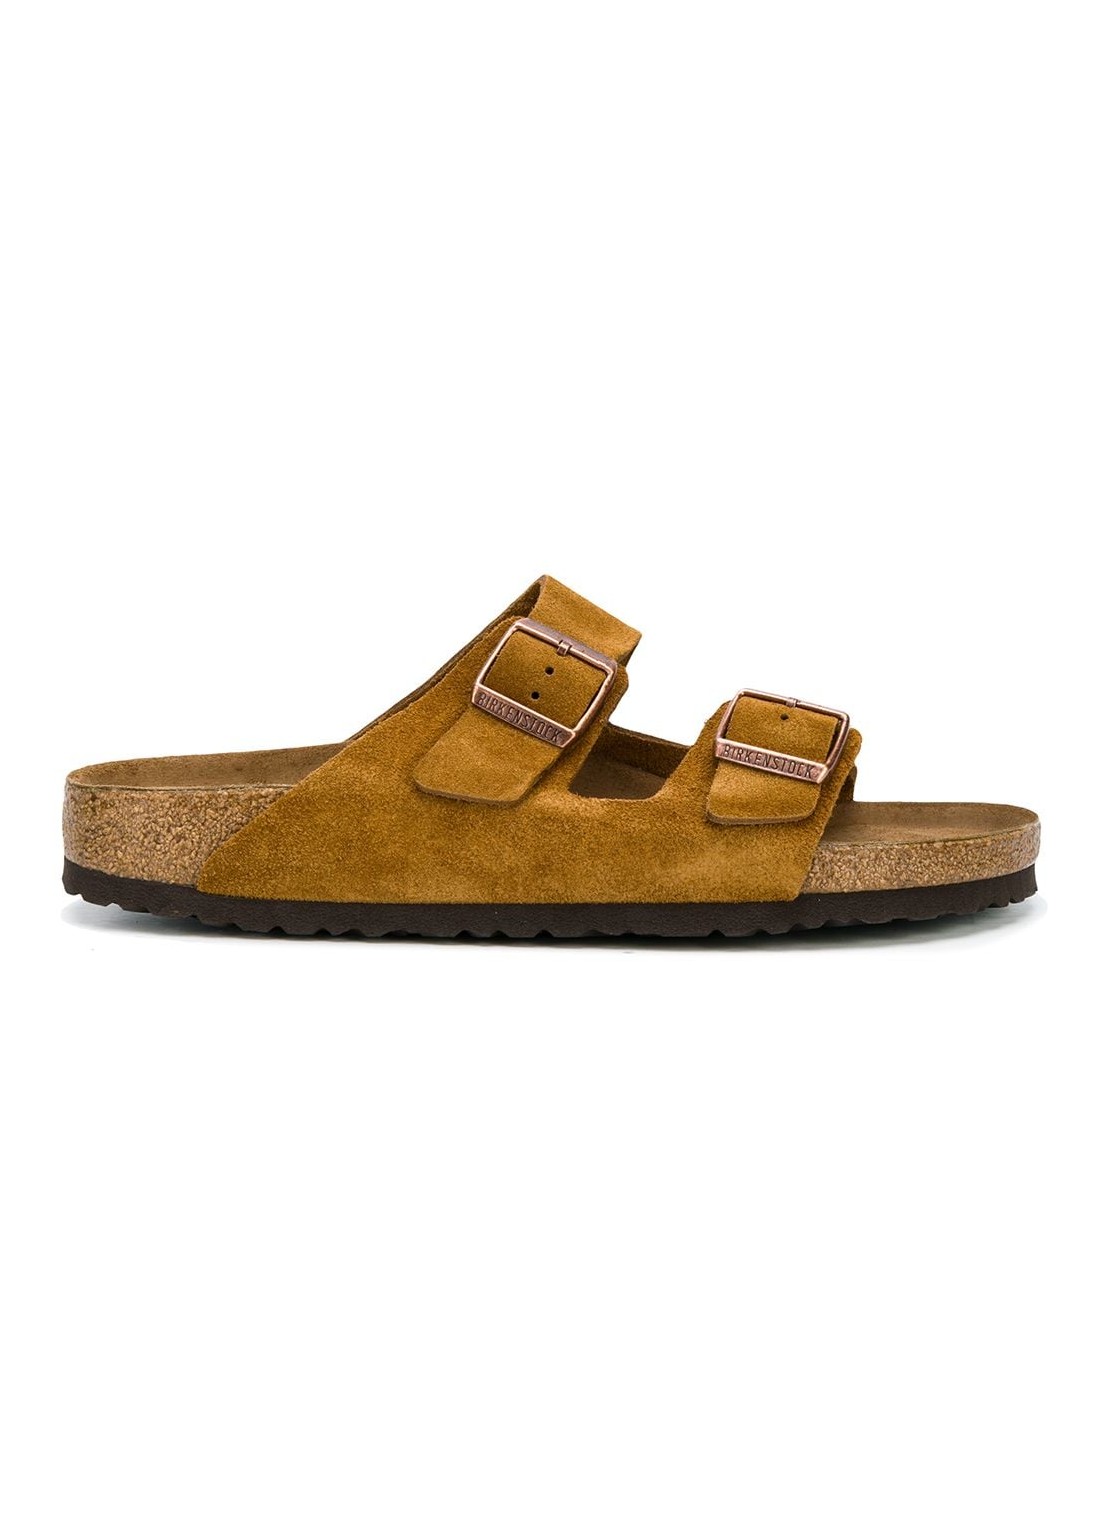 Sandalia birkenstock sandal man arizona sfb leve 1009527 mink talla marron
 